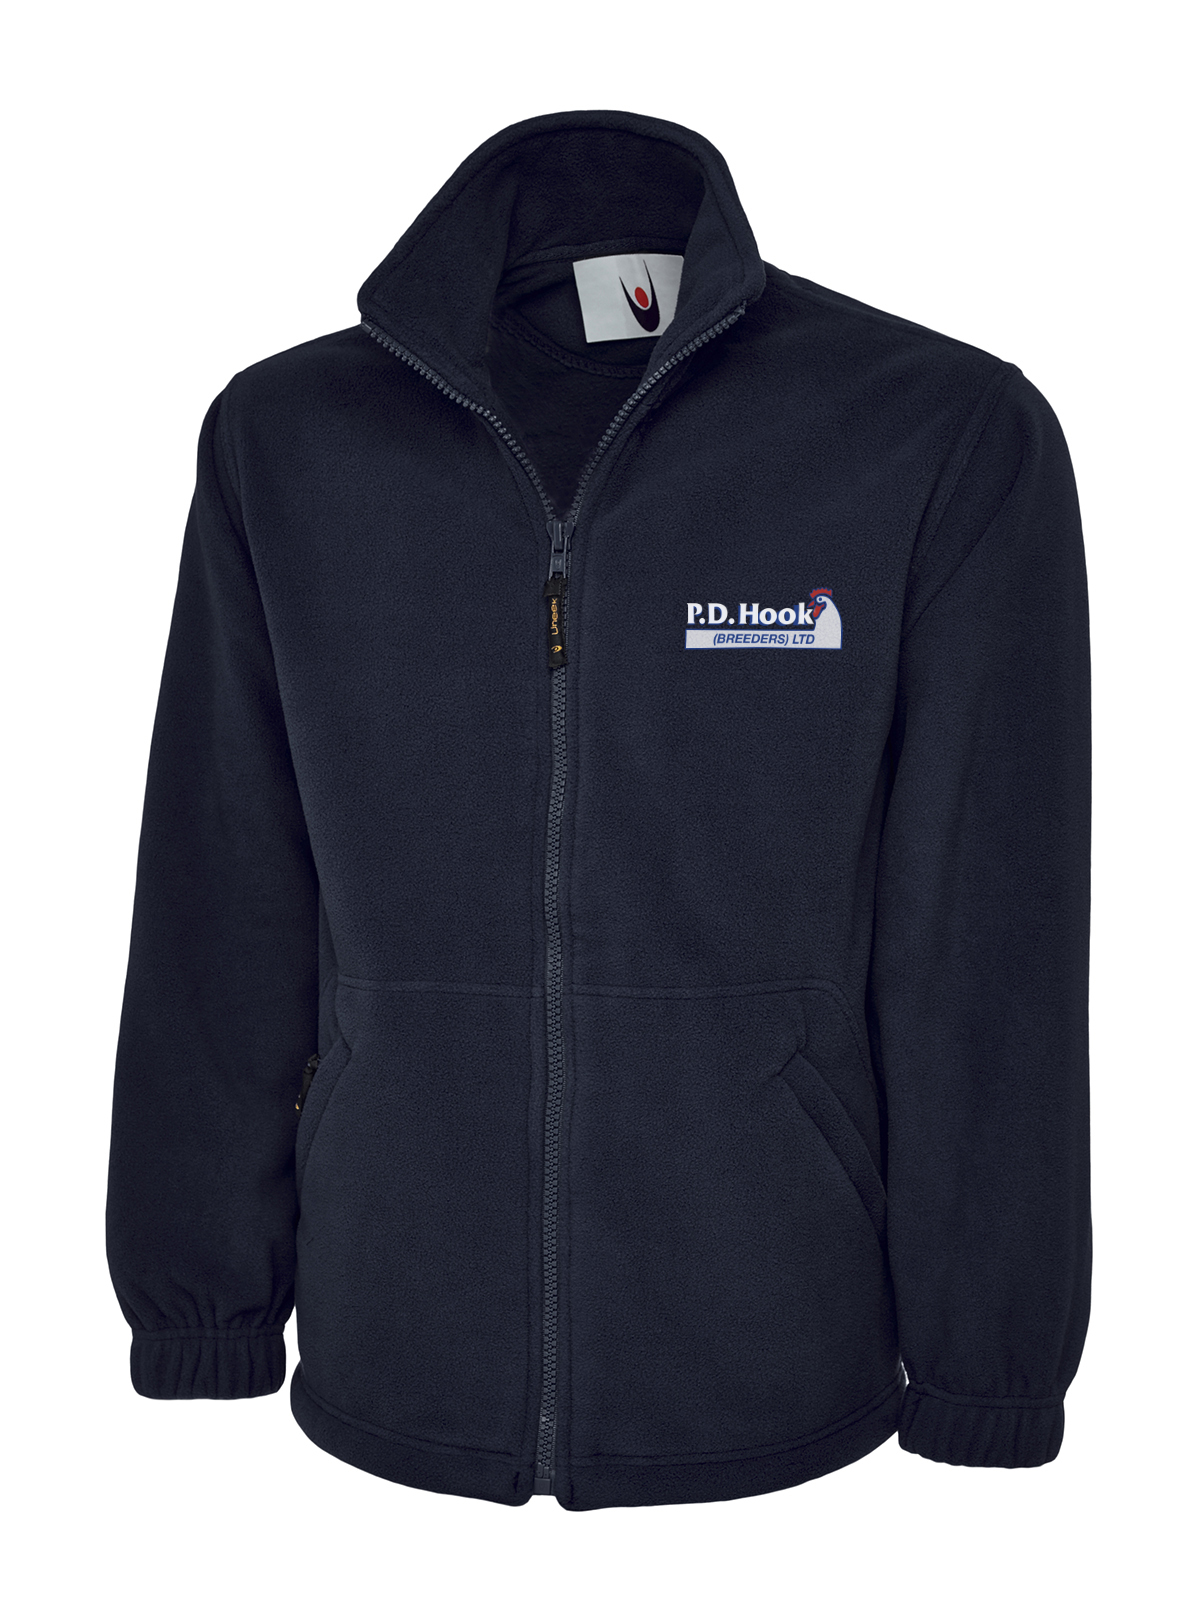 P D Hook (Breeders) Ltd - Full Zip Fleece Jacket, Navy - Size 5XL